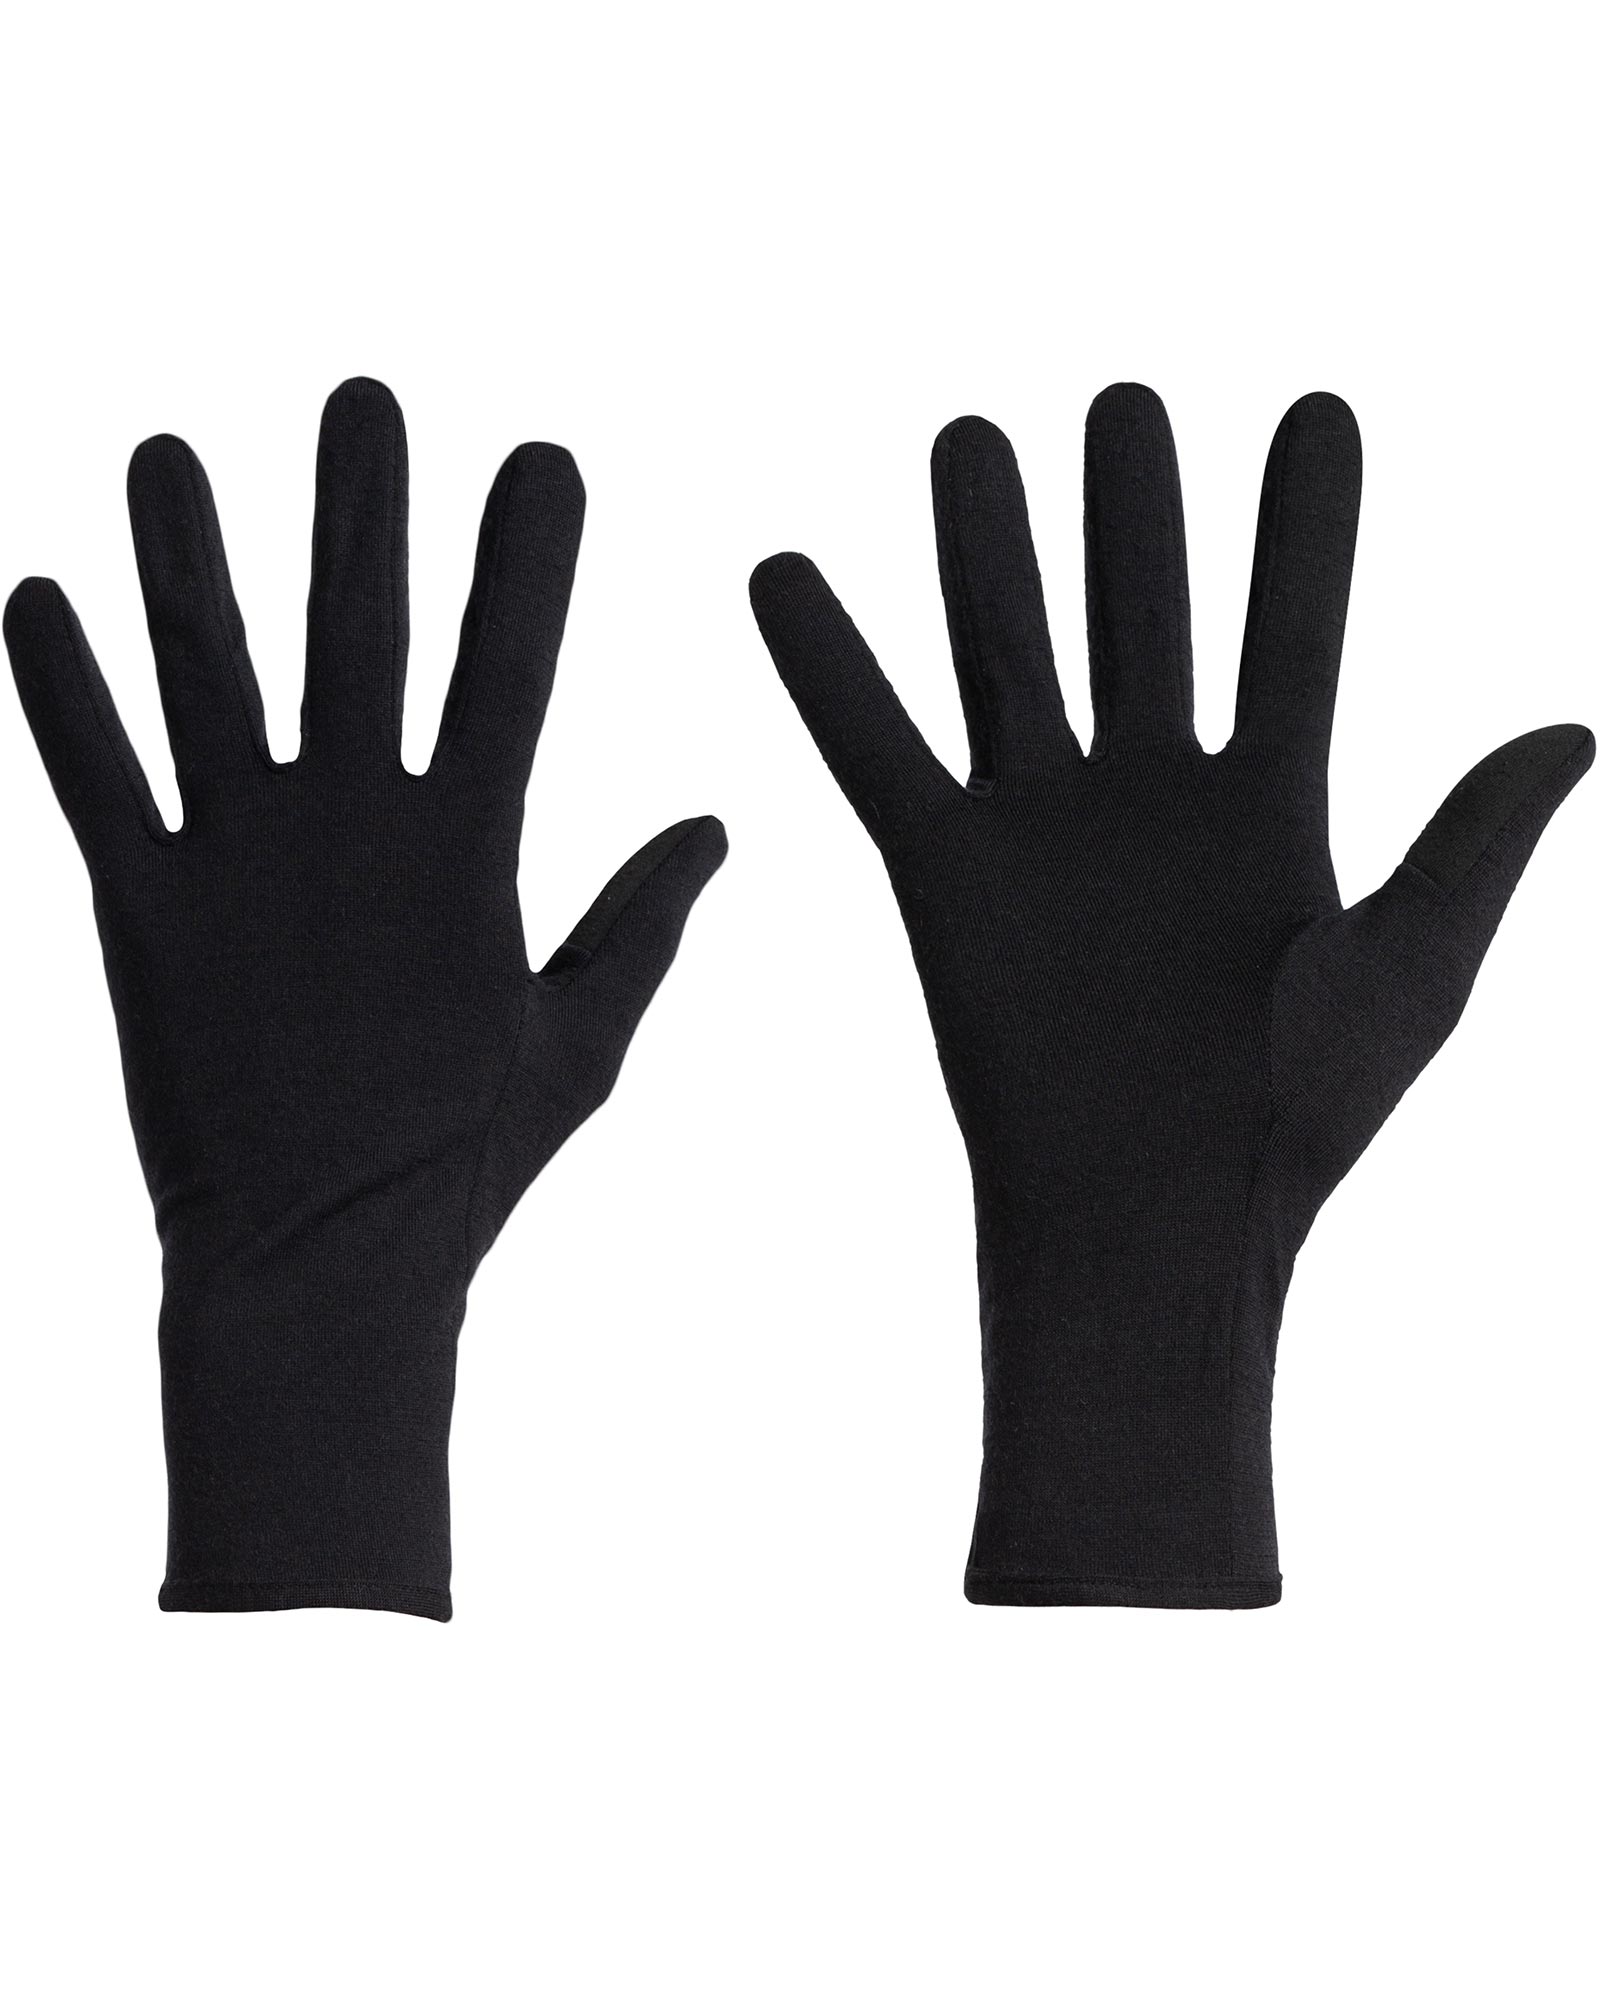 icebreaker Merino 260 Tech Glove Liners - black S